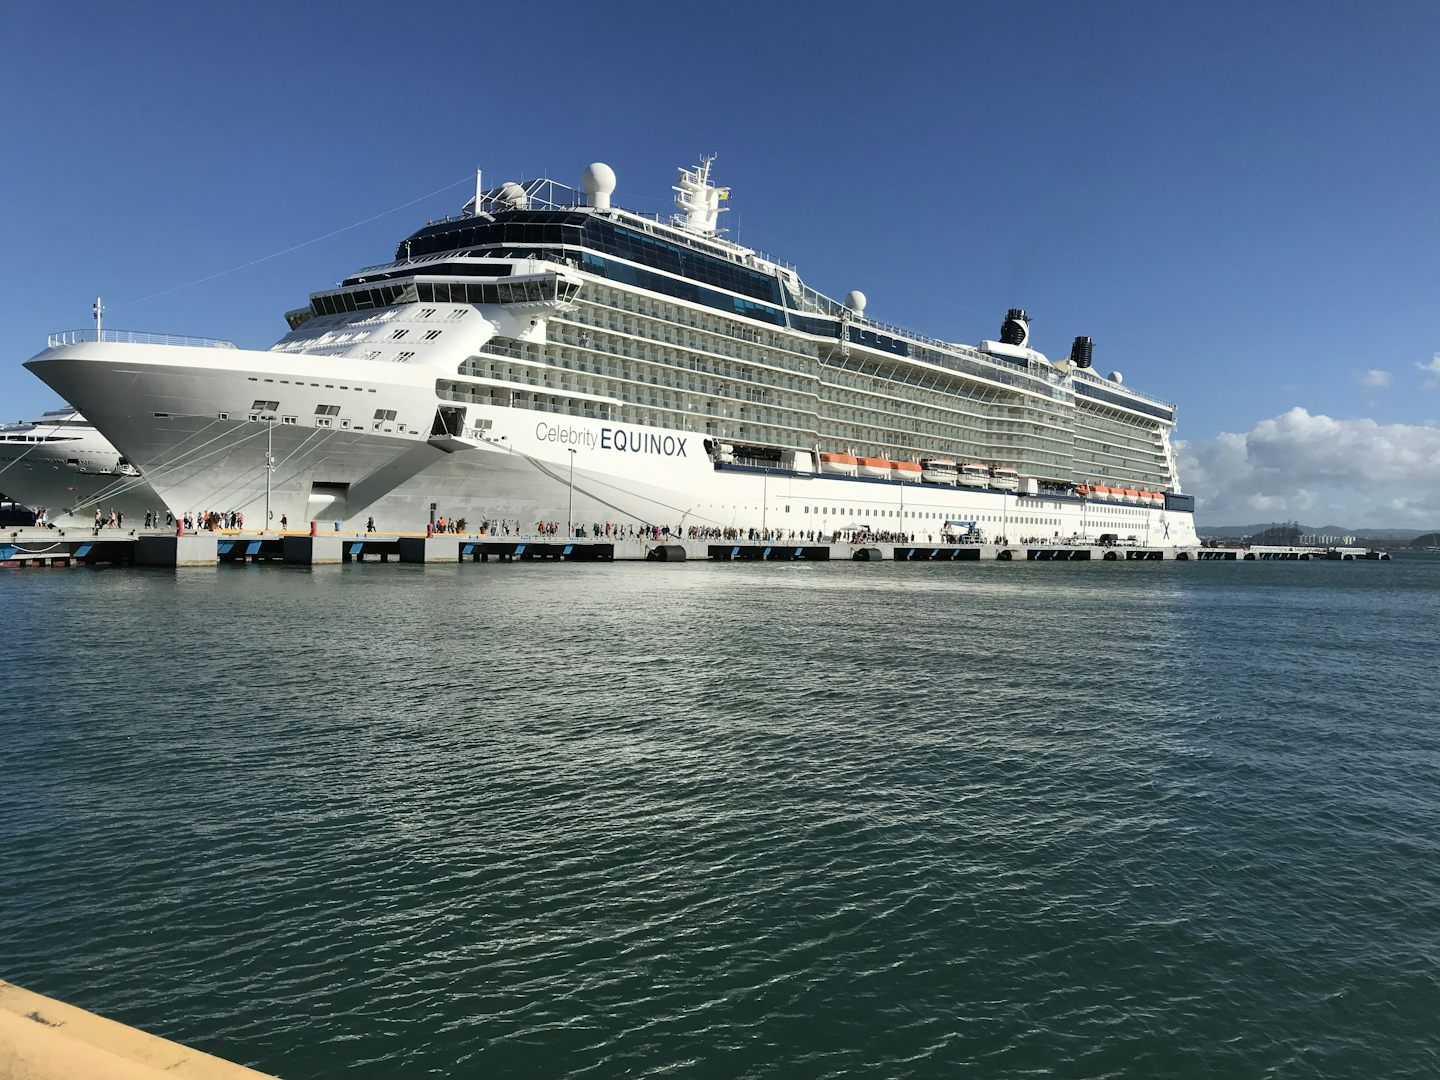 Equinox docked in San Juan